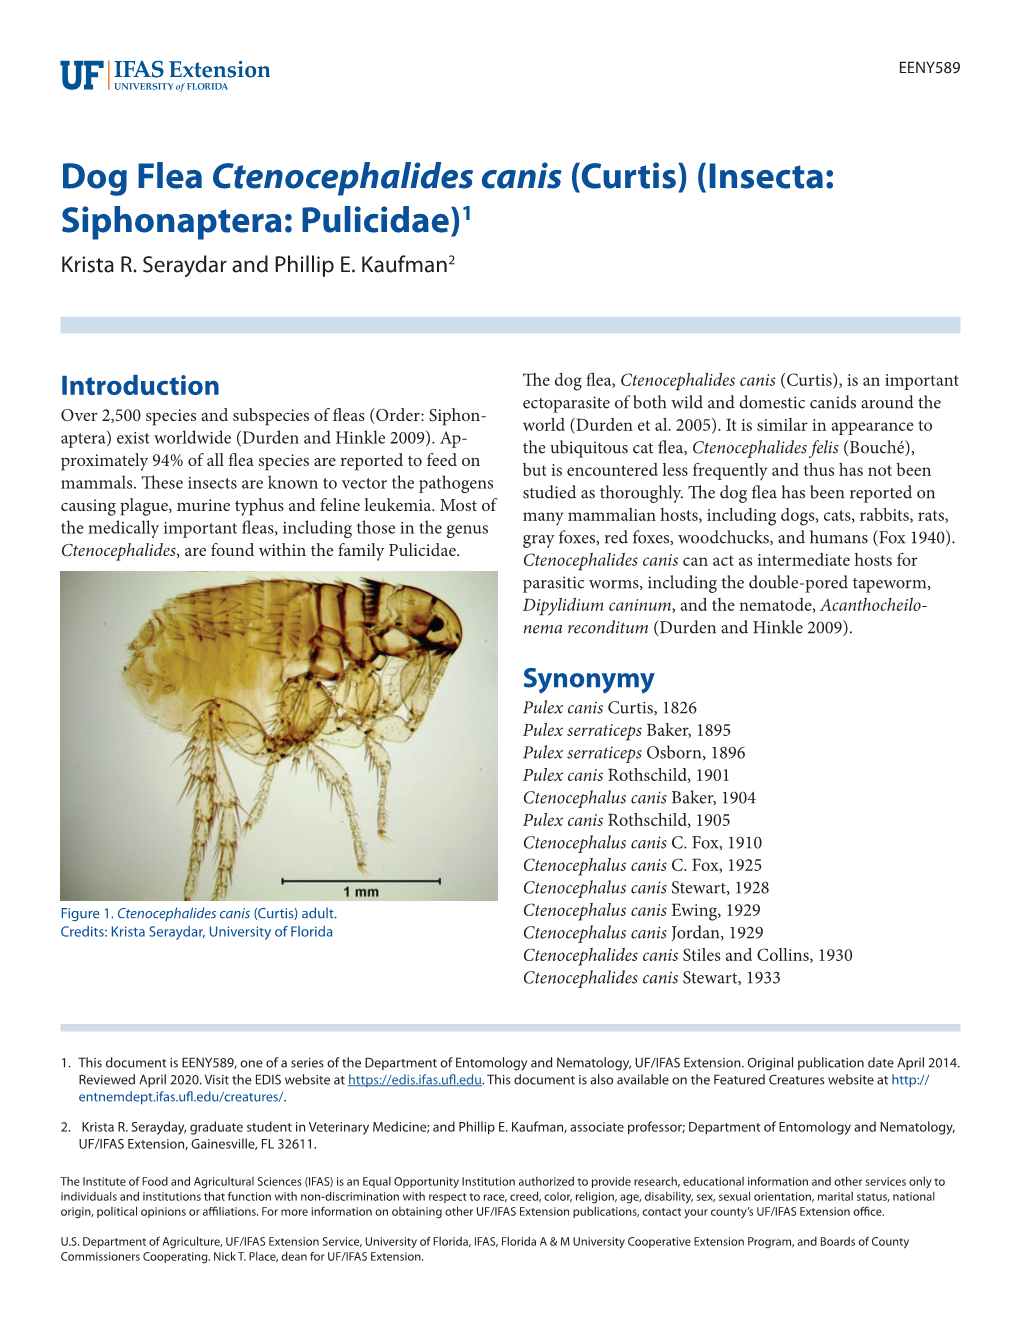 Dog Flea Ctenocephalides Canis (Curtis) (Insecta: Siphonaptera: Pulicidae)1 Krista R